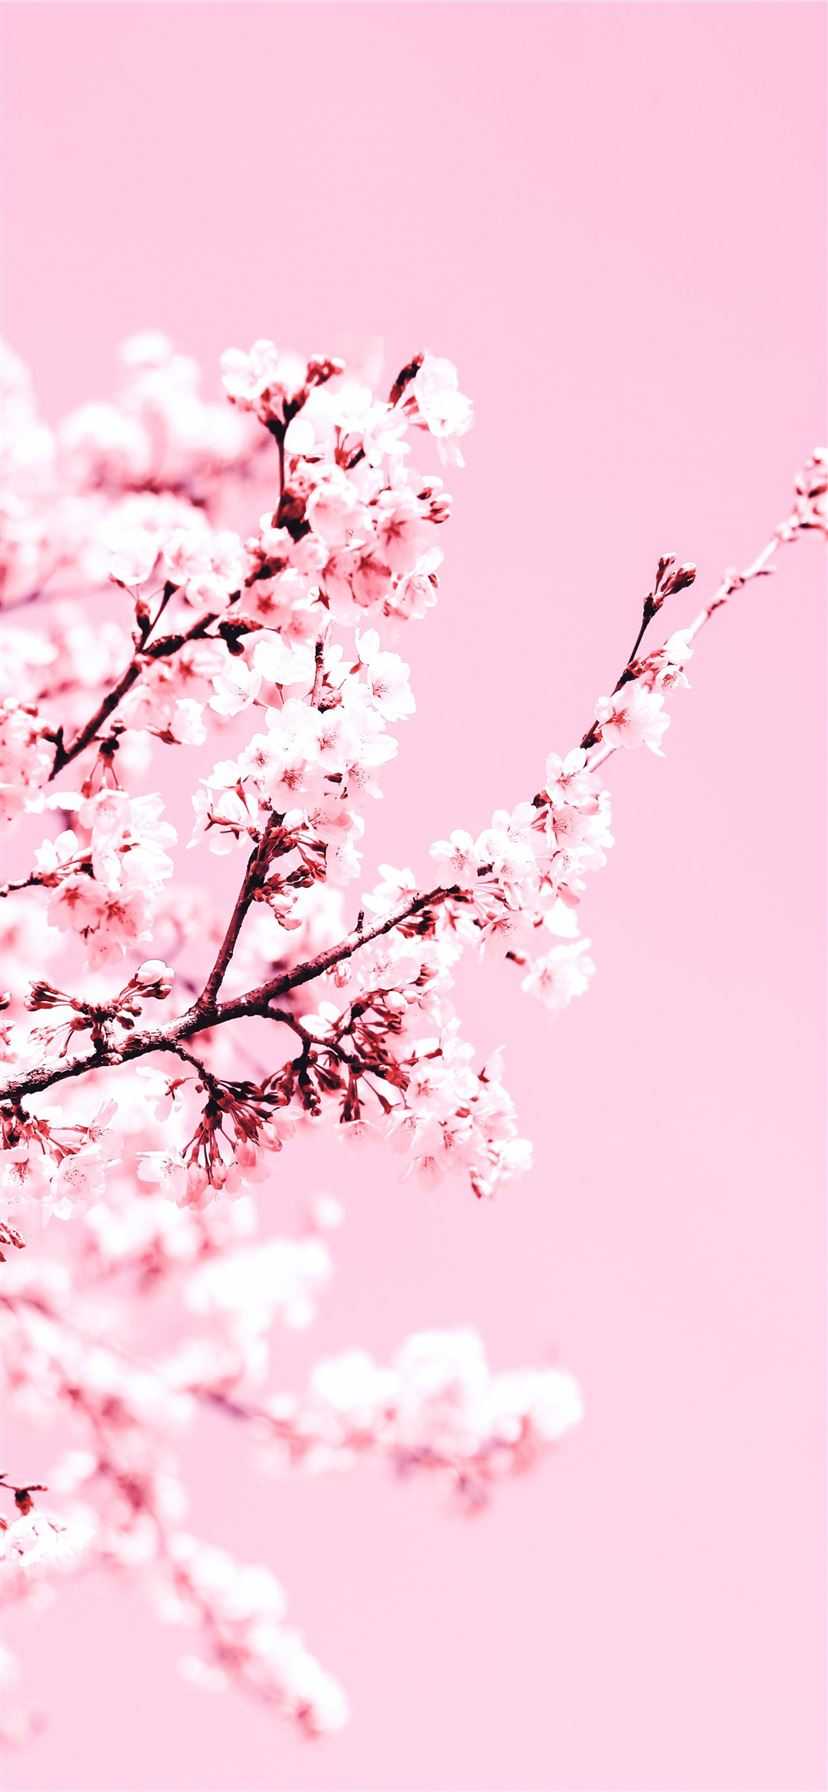 Details 74+ anime cherry blossom wallpaper 4k latest - in.cdgdbentre